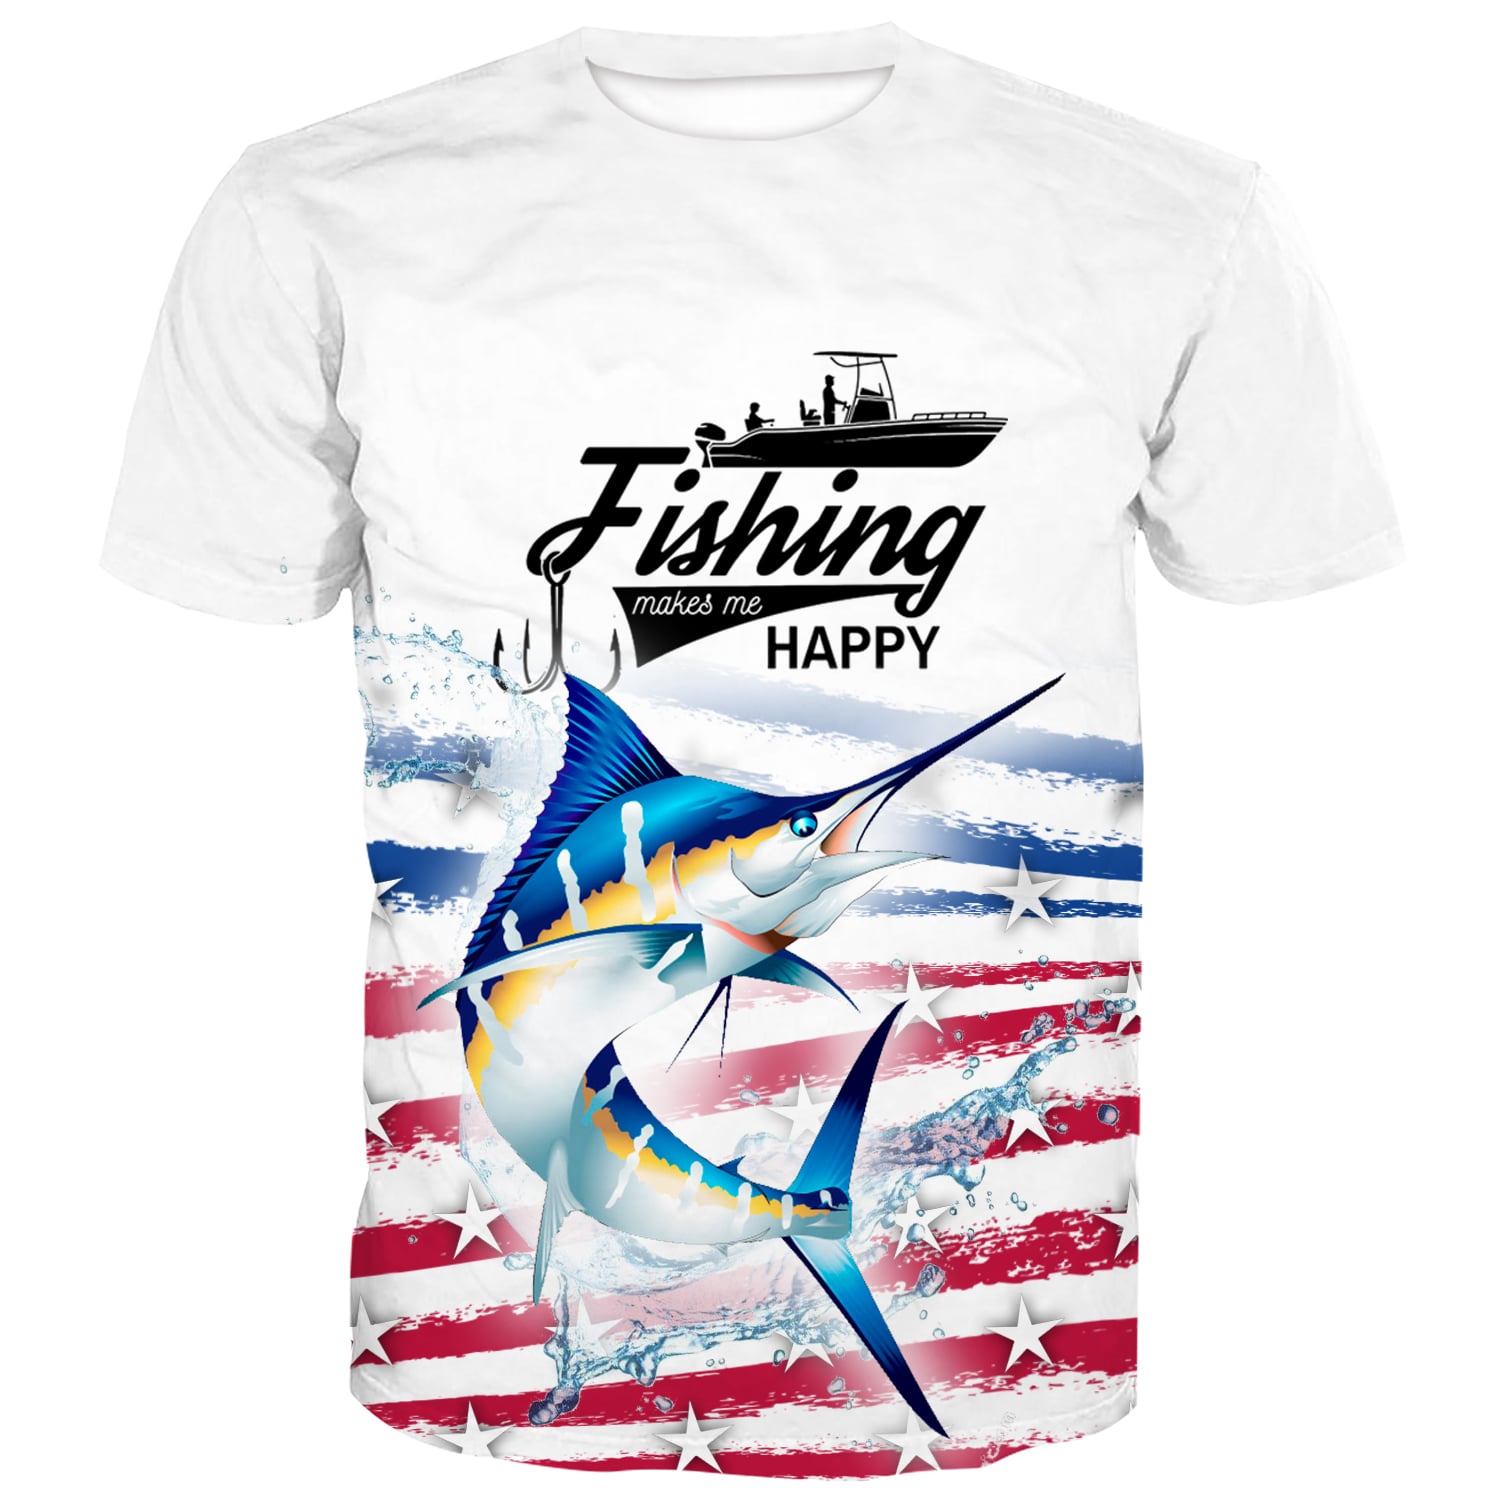 Fishing makes me happy - Blue Marlin T-Shirt